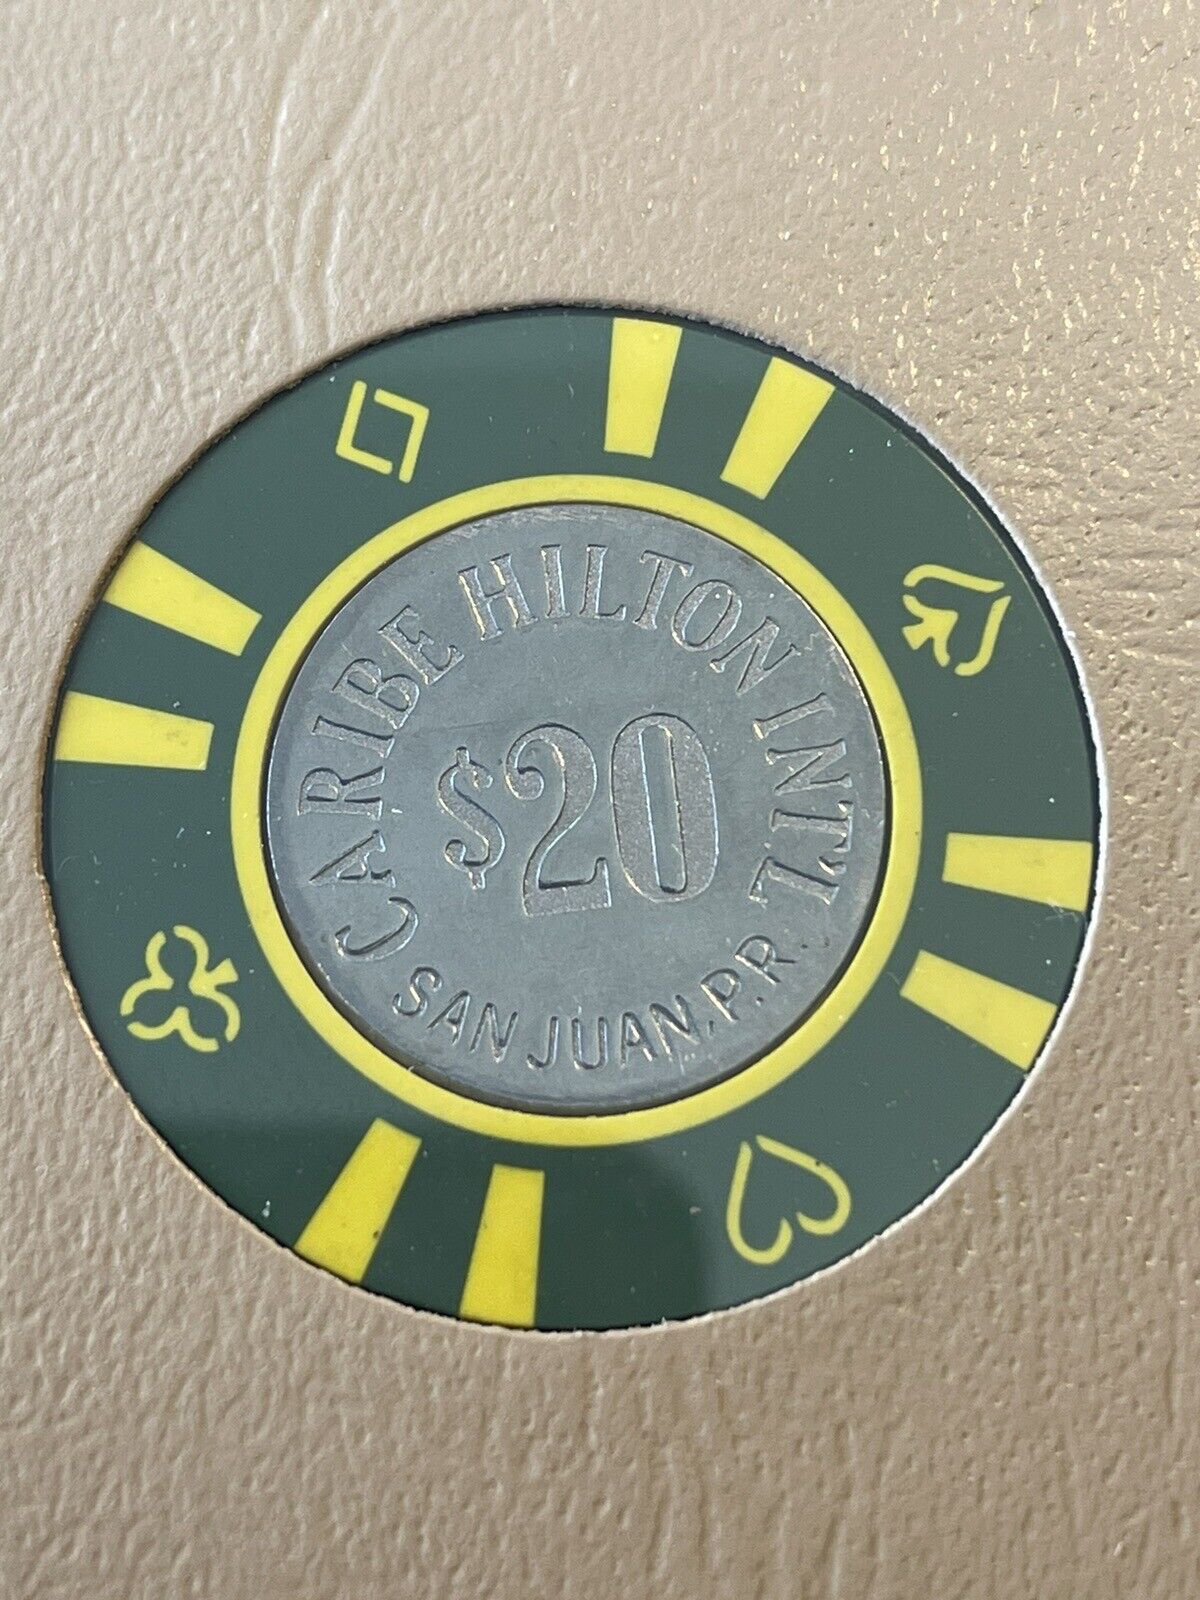 $20 Caribe Hilton San Juan Puerto Rico Casino Chip **Very Rare** Coin Inlay